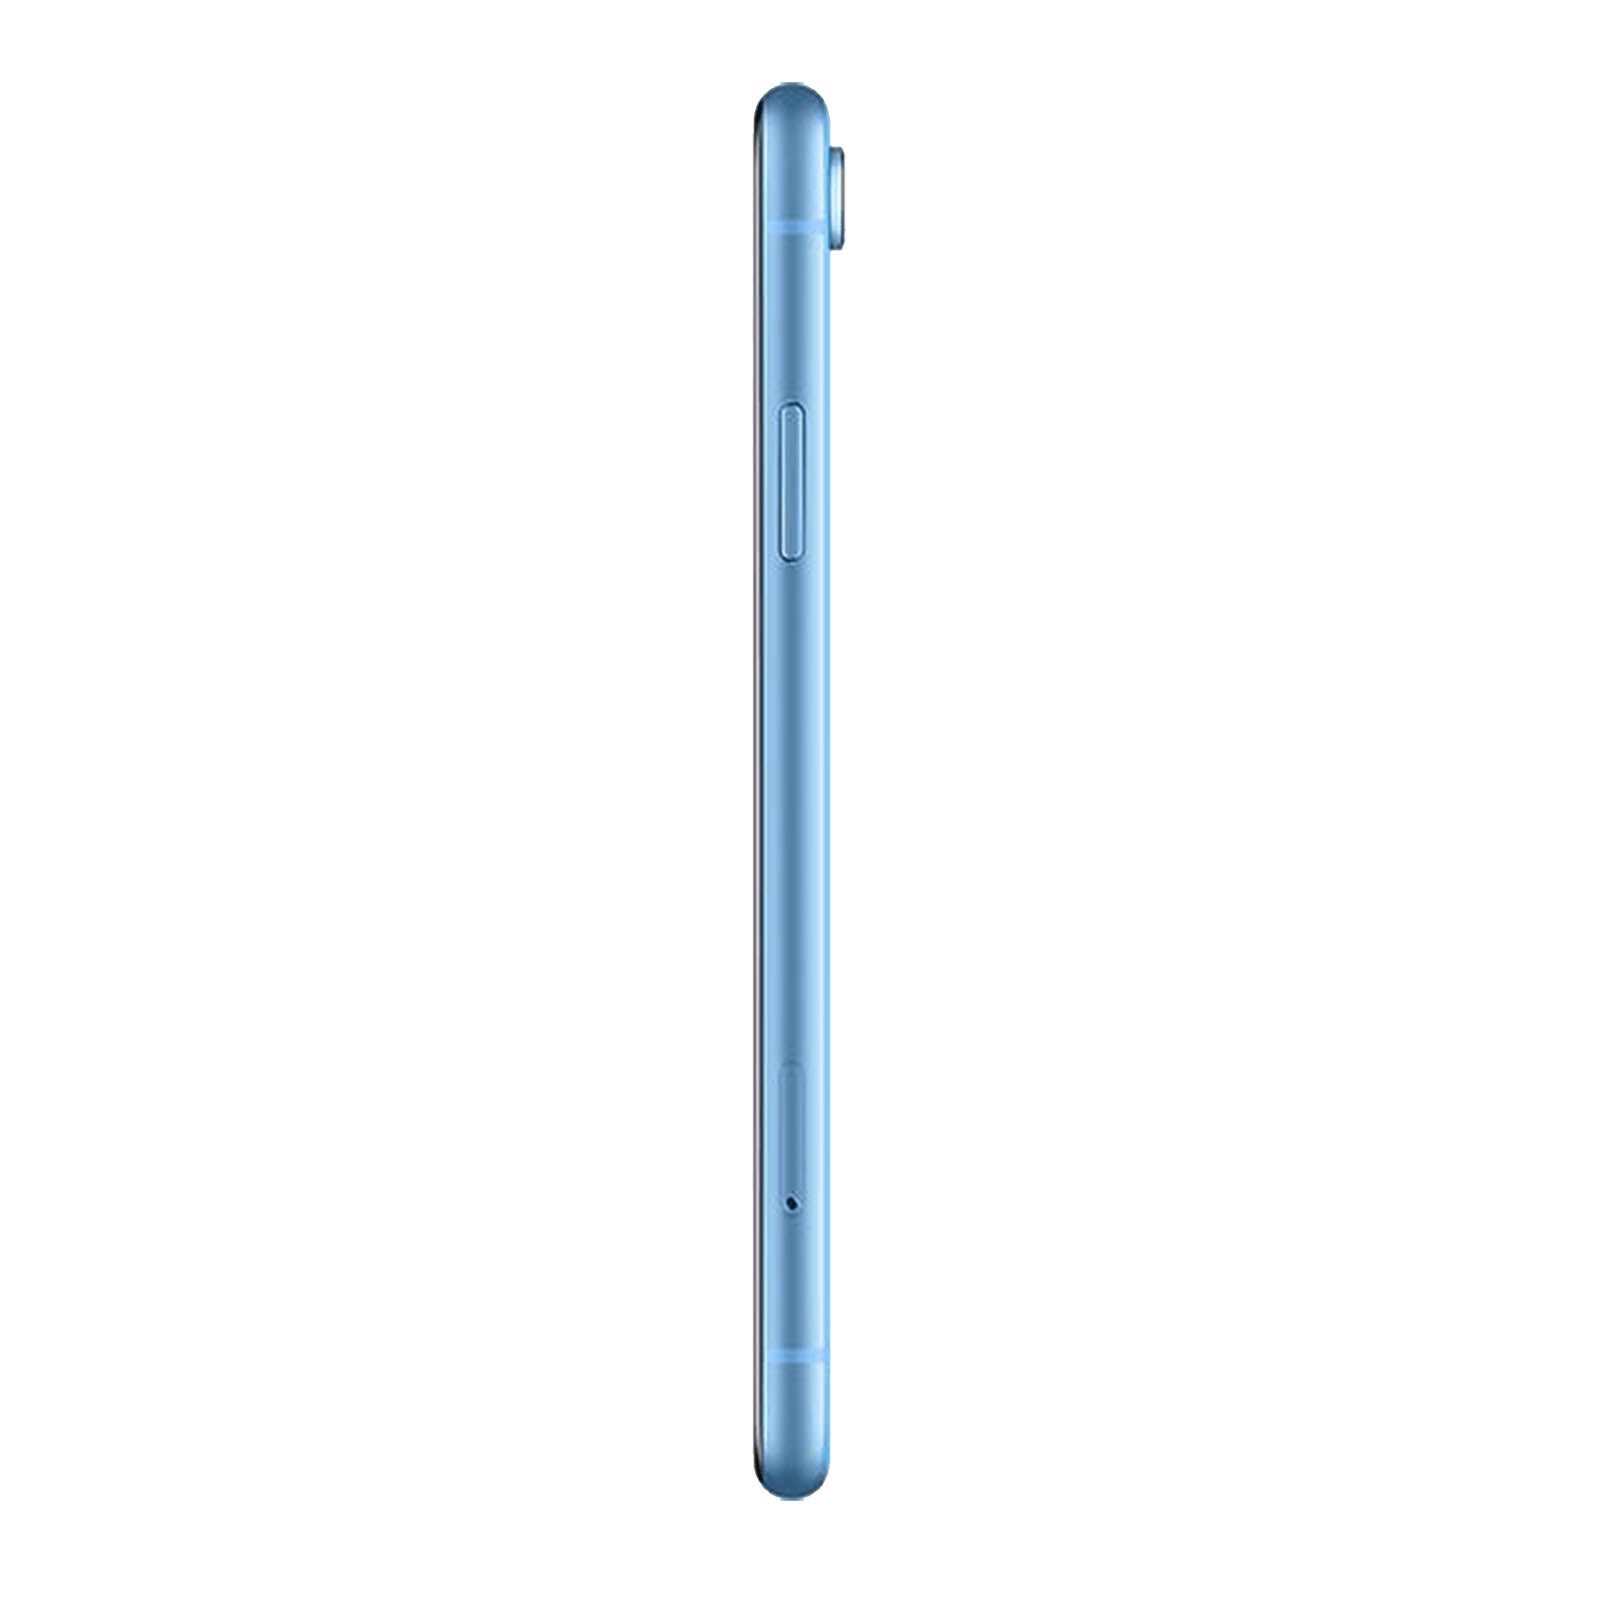 Apple iPhone XR 64GB Blue Very Good - Unlocked